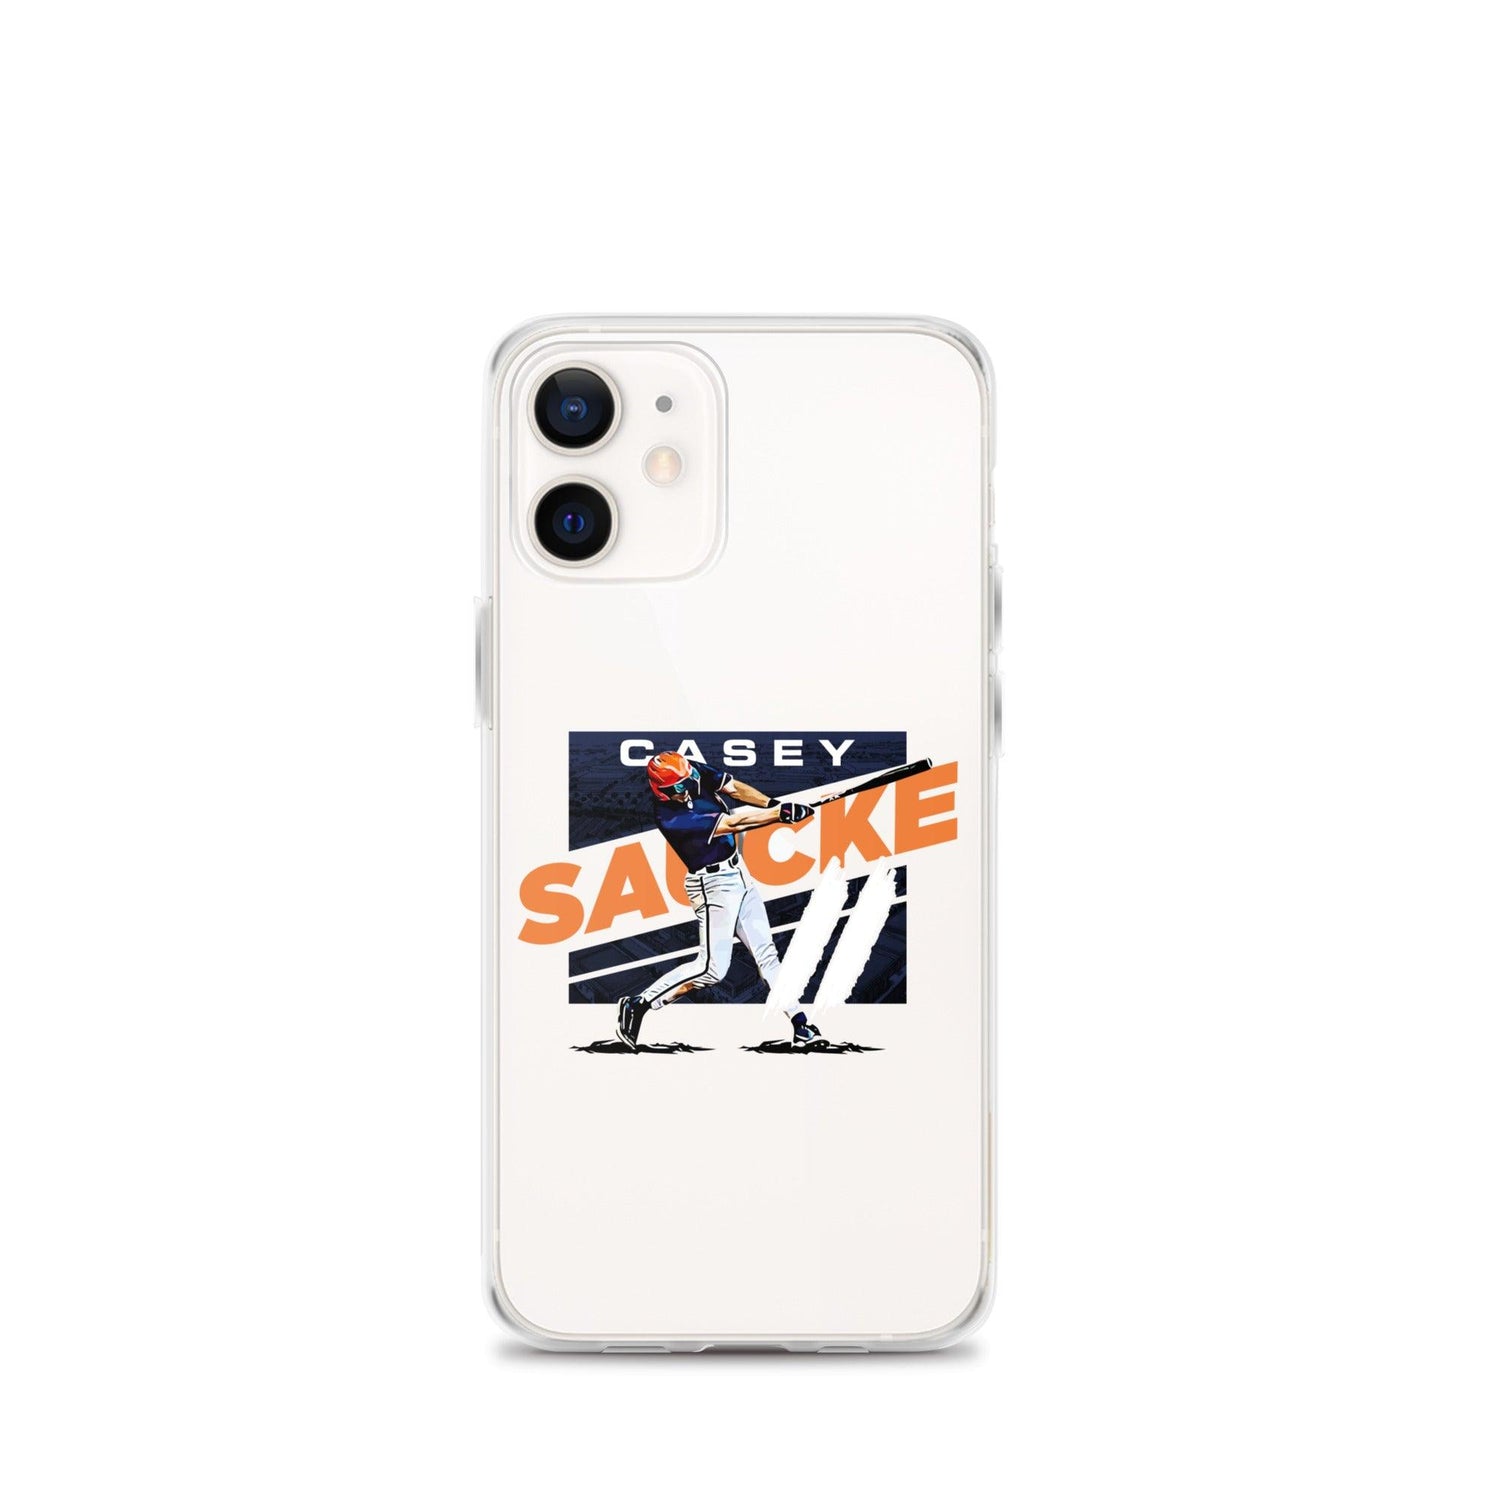 Casey Saucke II “Essential” iPhone Case - Fan Arch